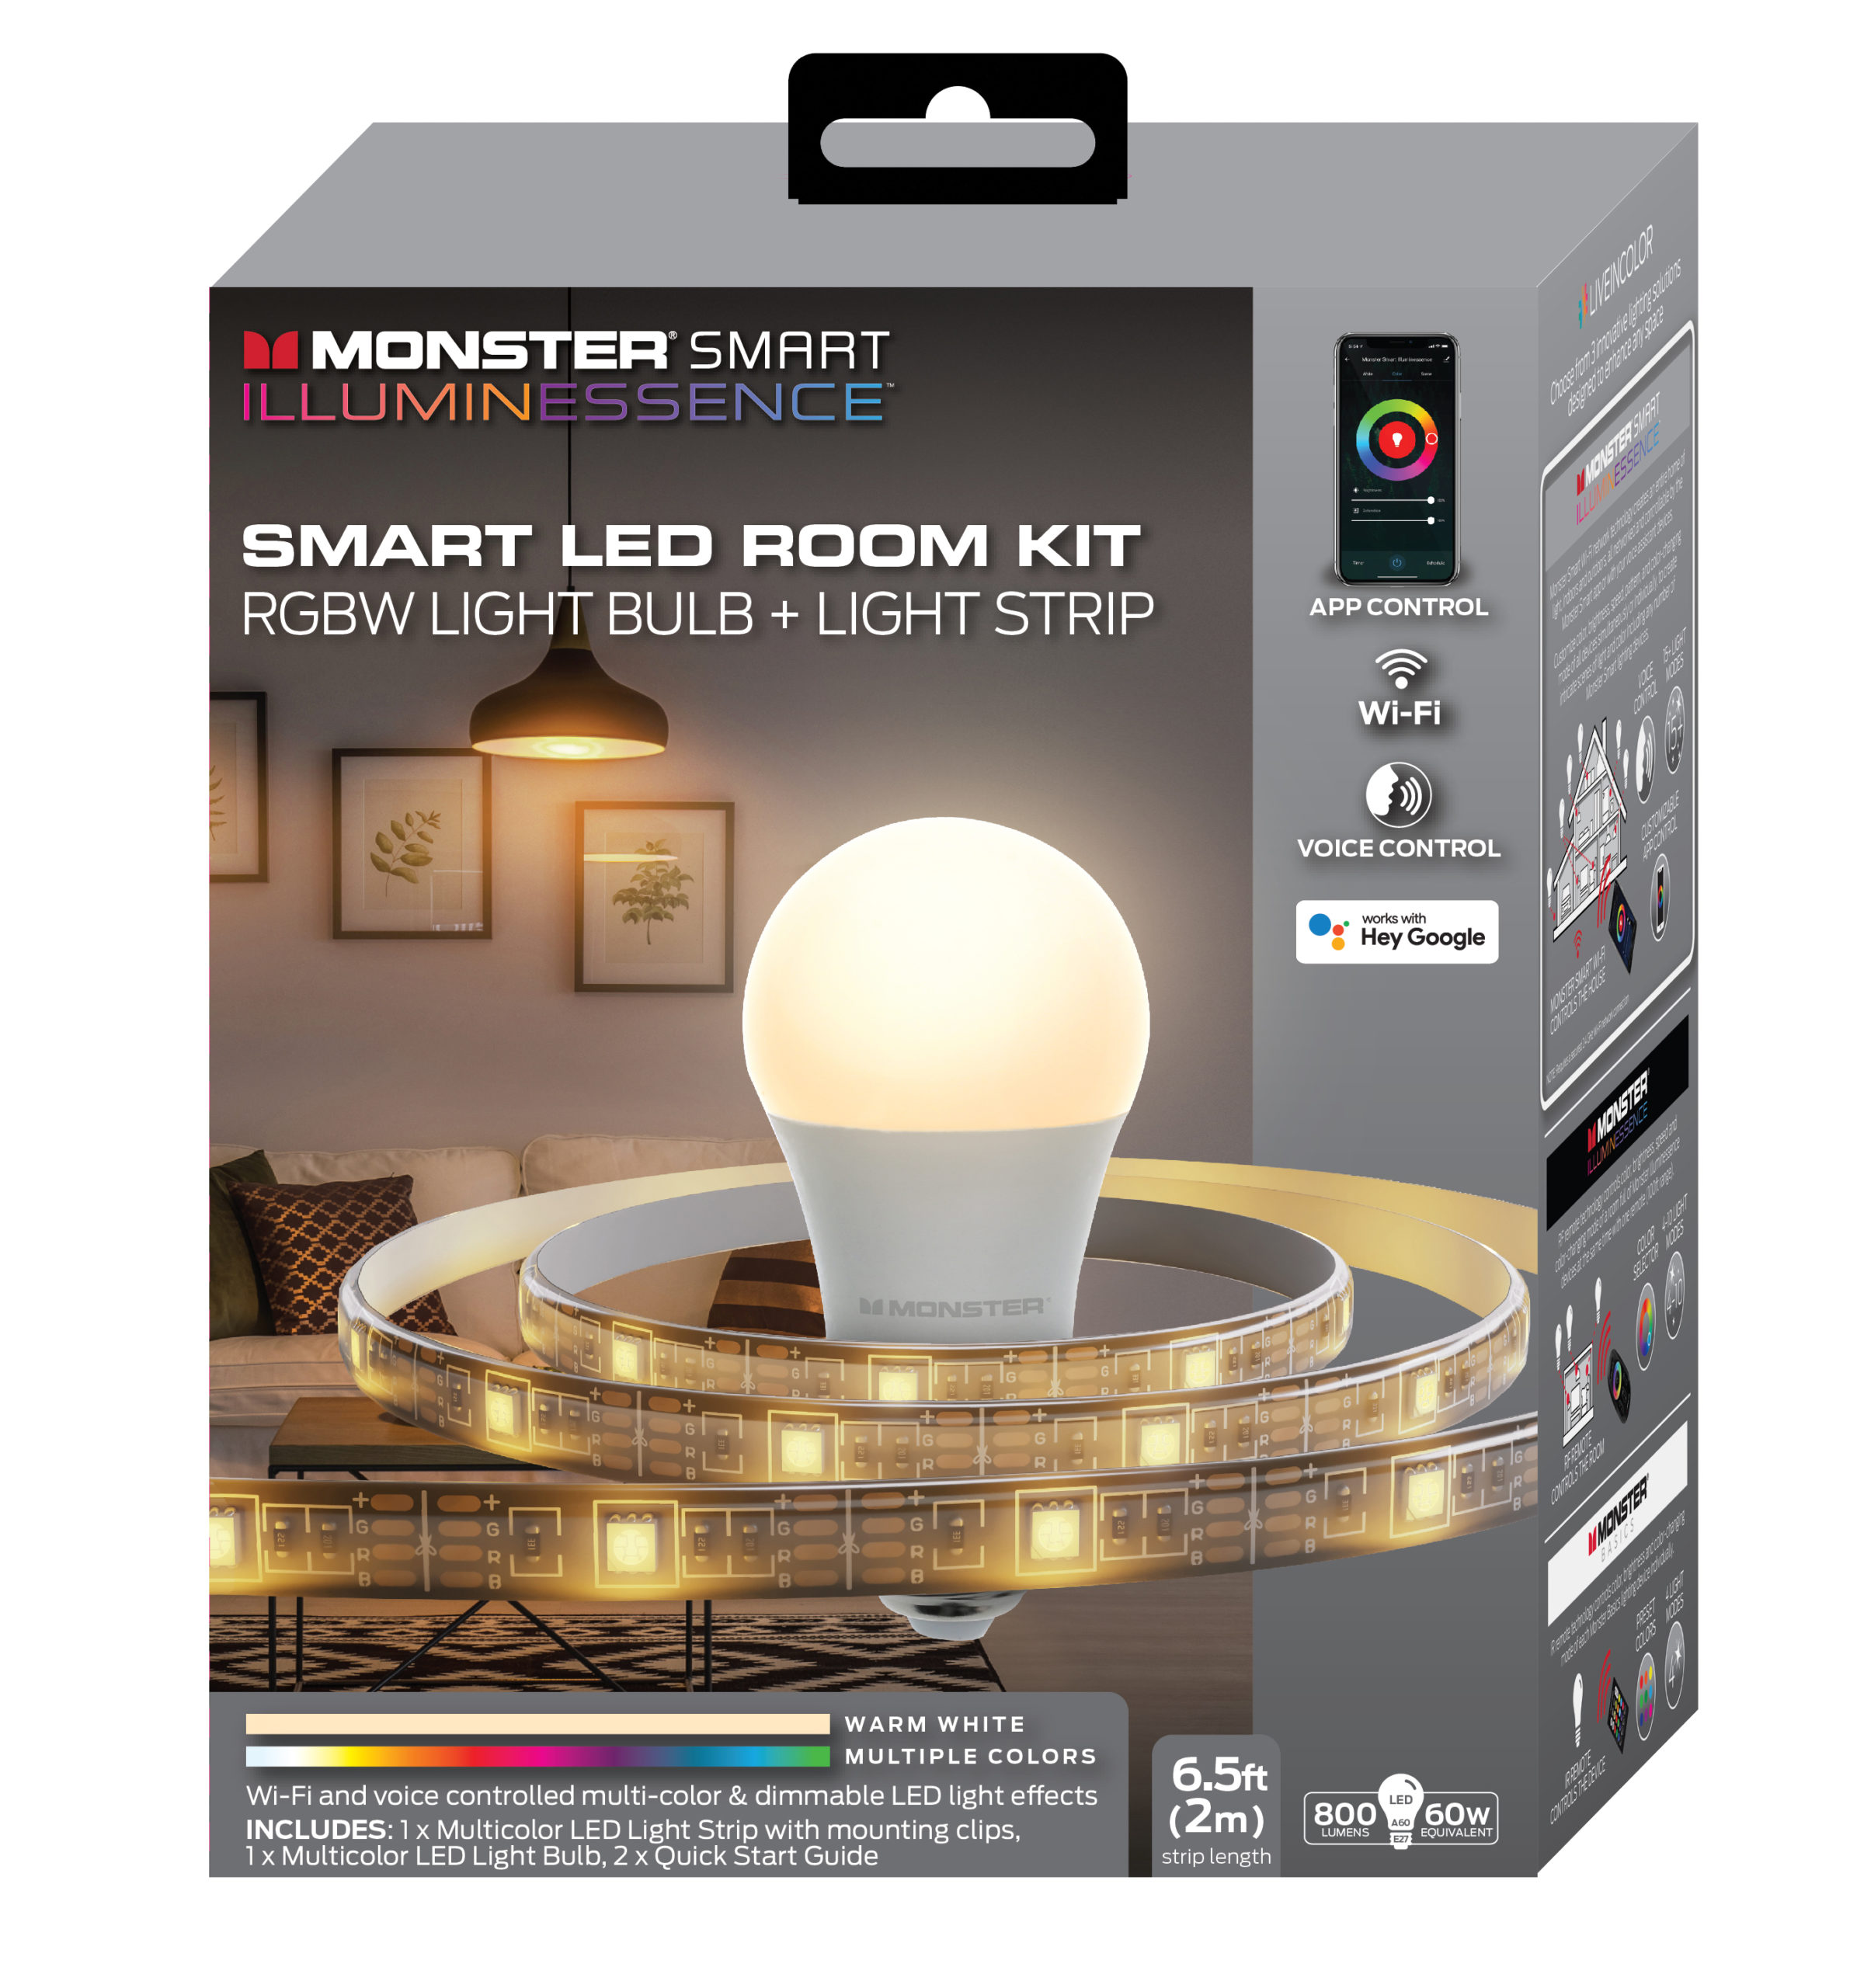 LED Room Kit with Smart Light Bulb and Smart LED Strip - Monster Illuminessence